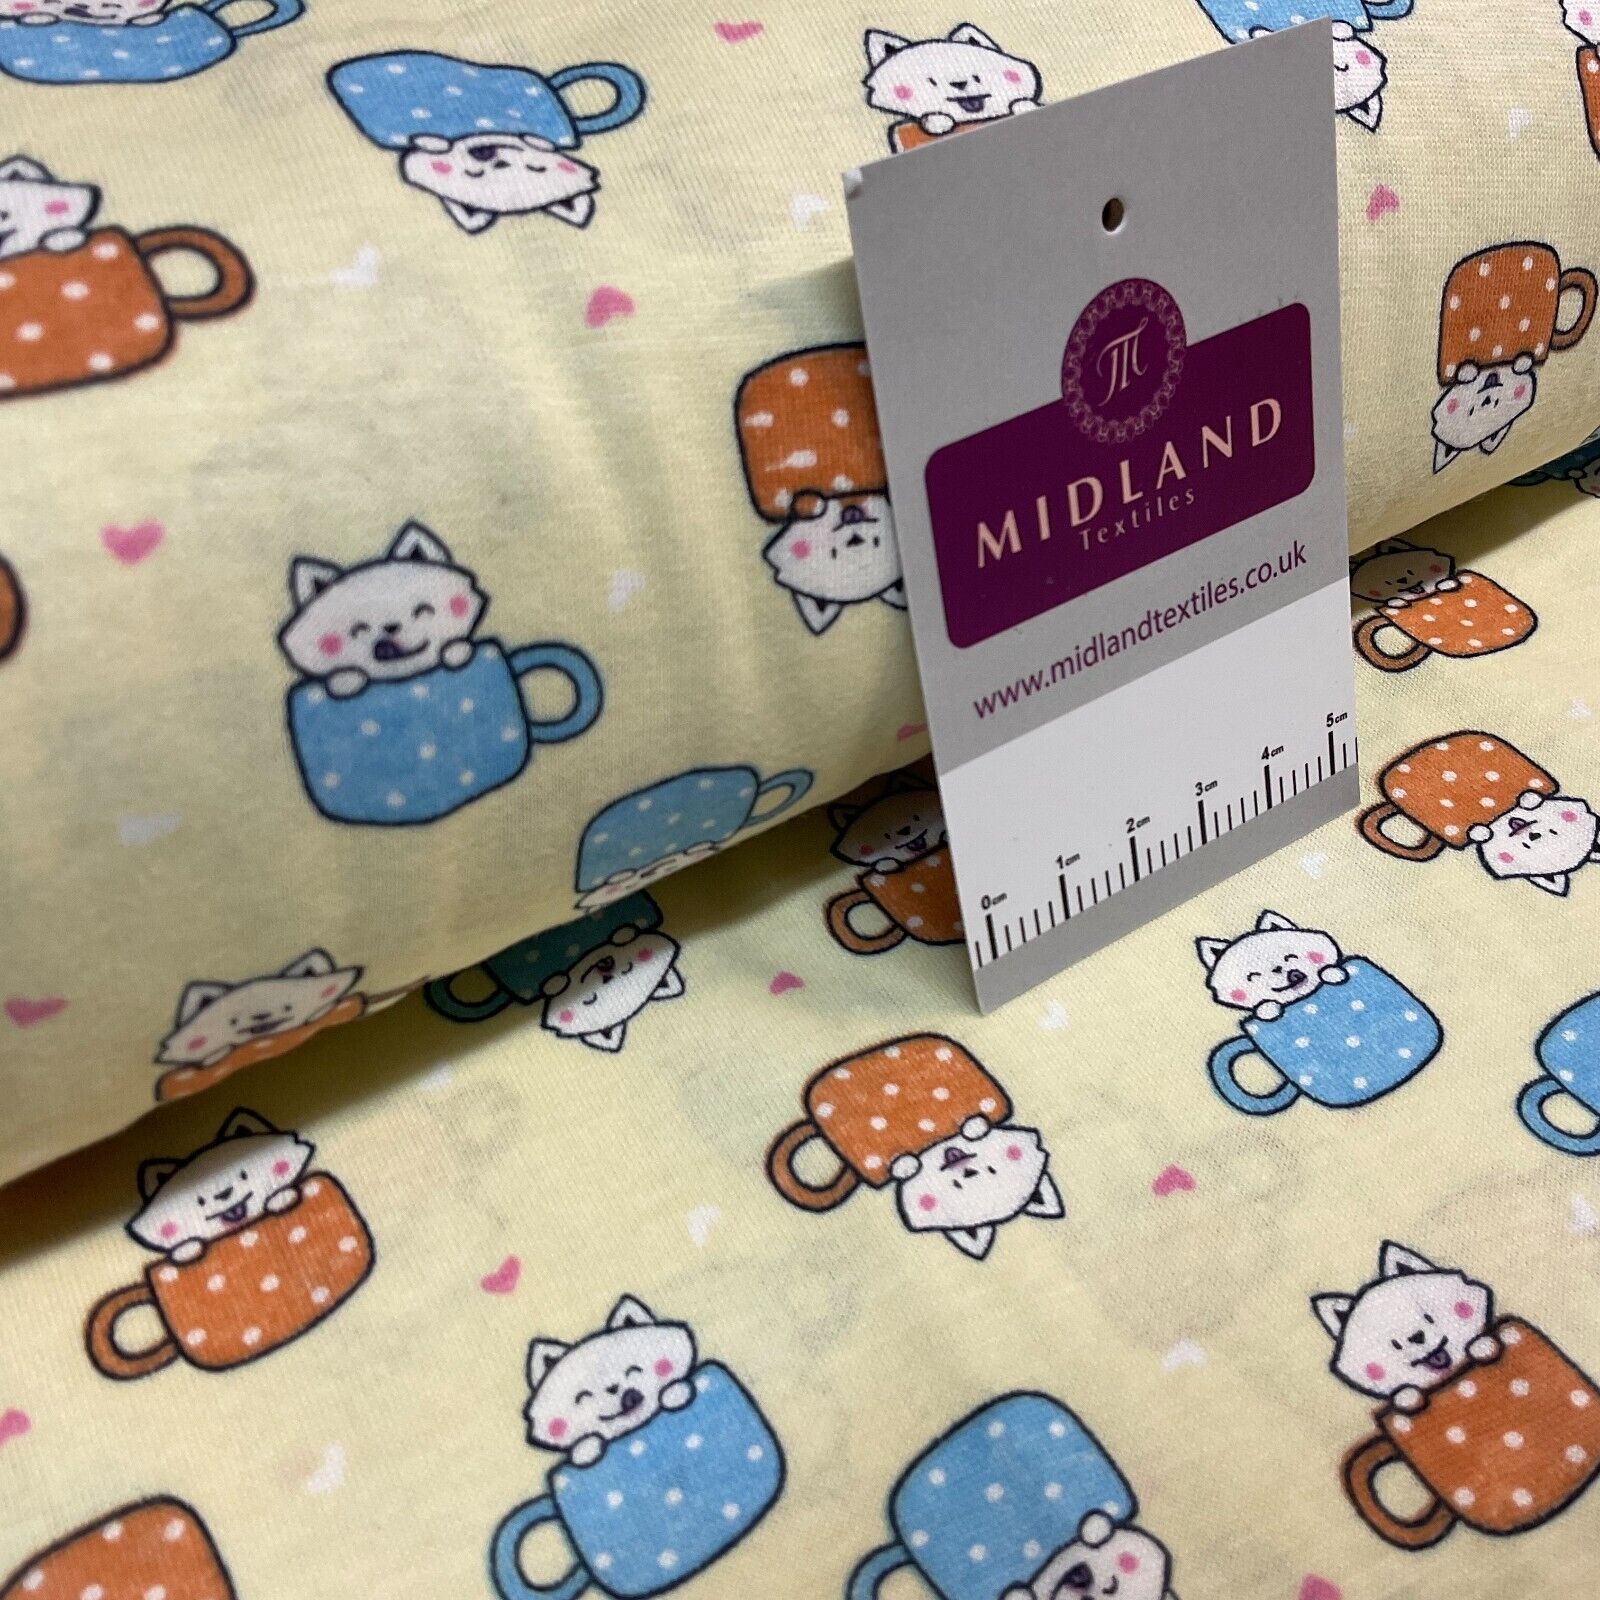 Children's Kitten Kitty Cup cotton stretch jersey novelty dress fabric M1716